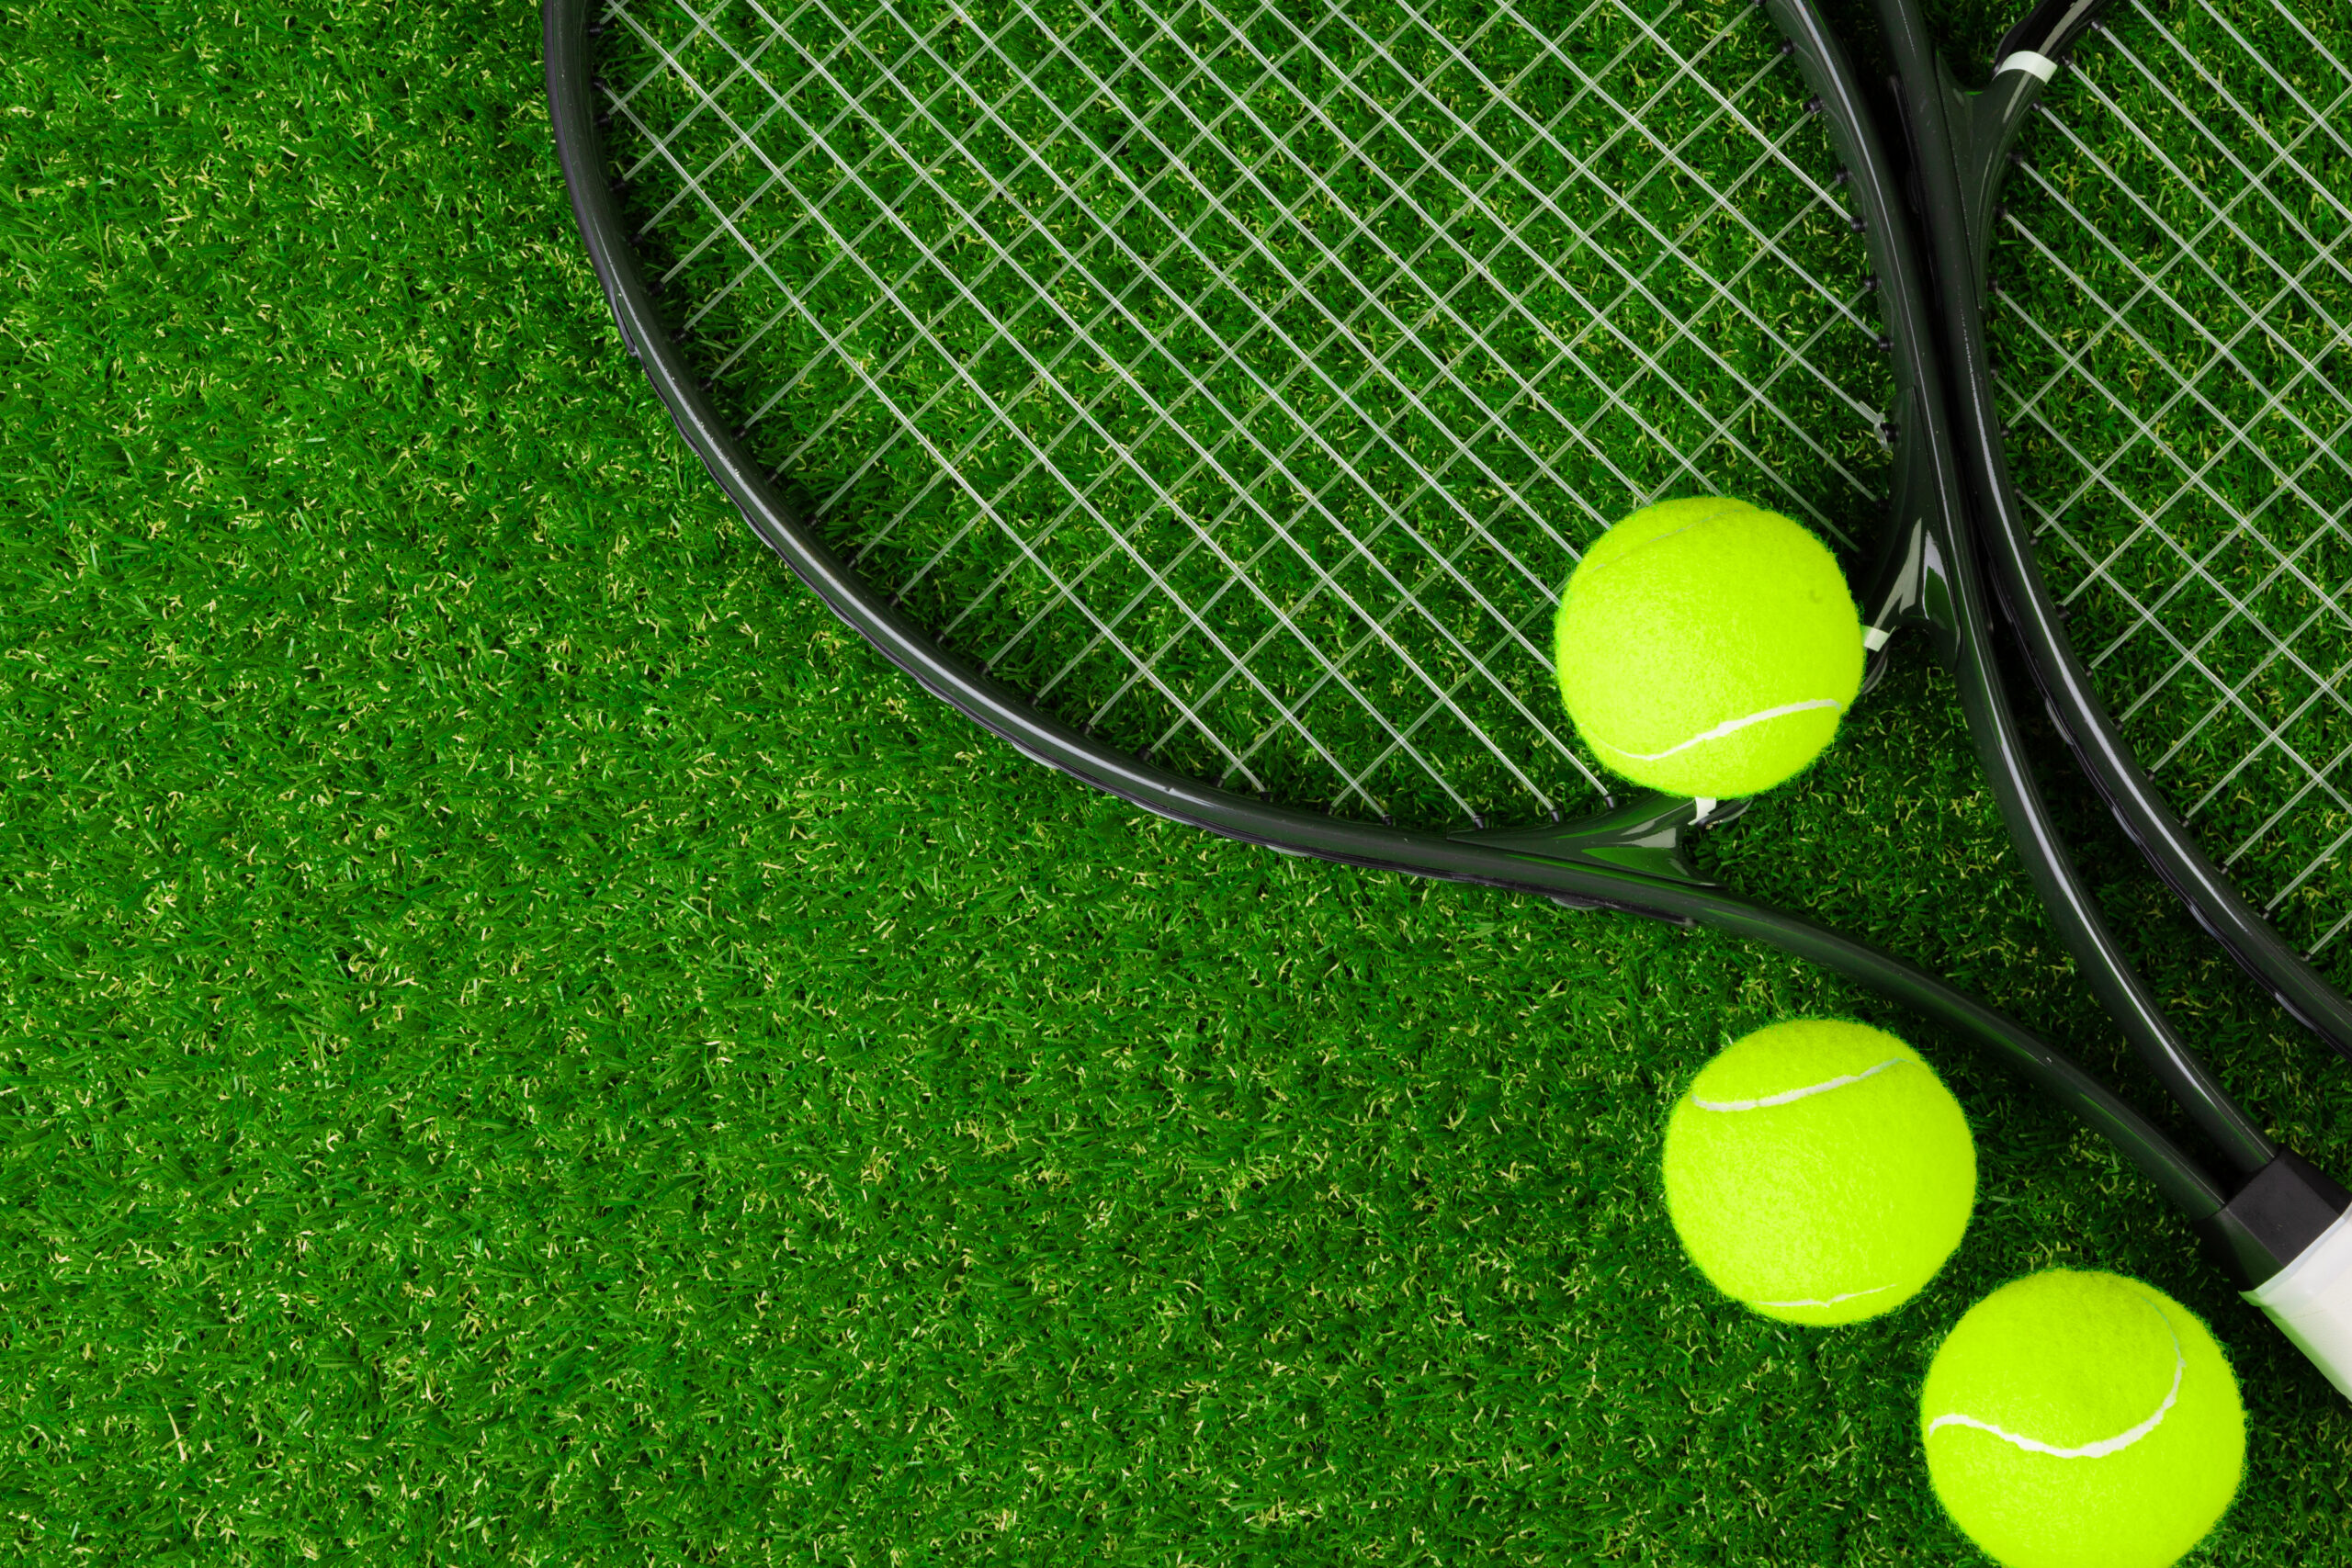 tennis balls on grass close up tennis equipment 2021 11 03 17 29 46 utc